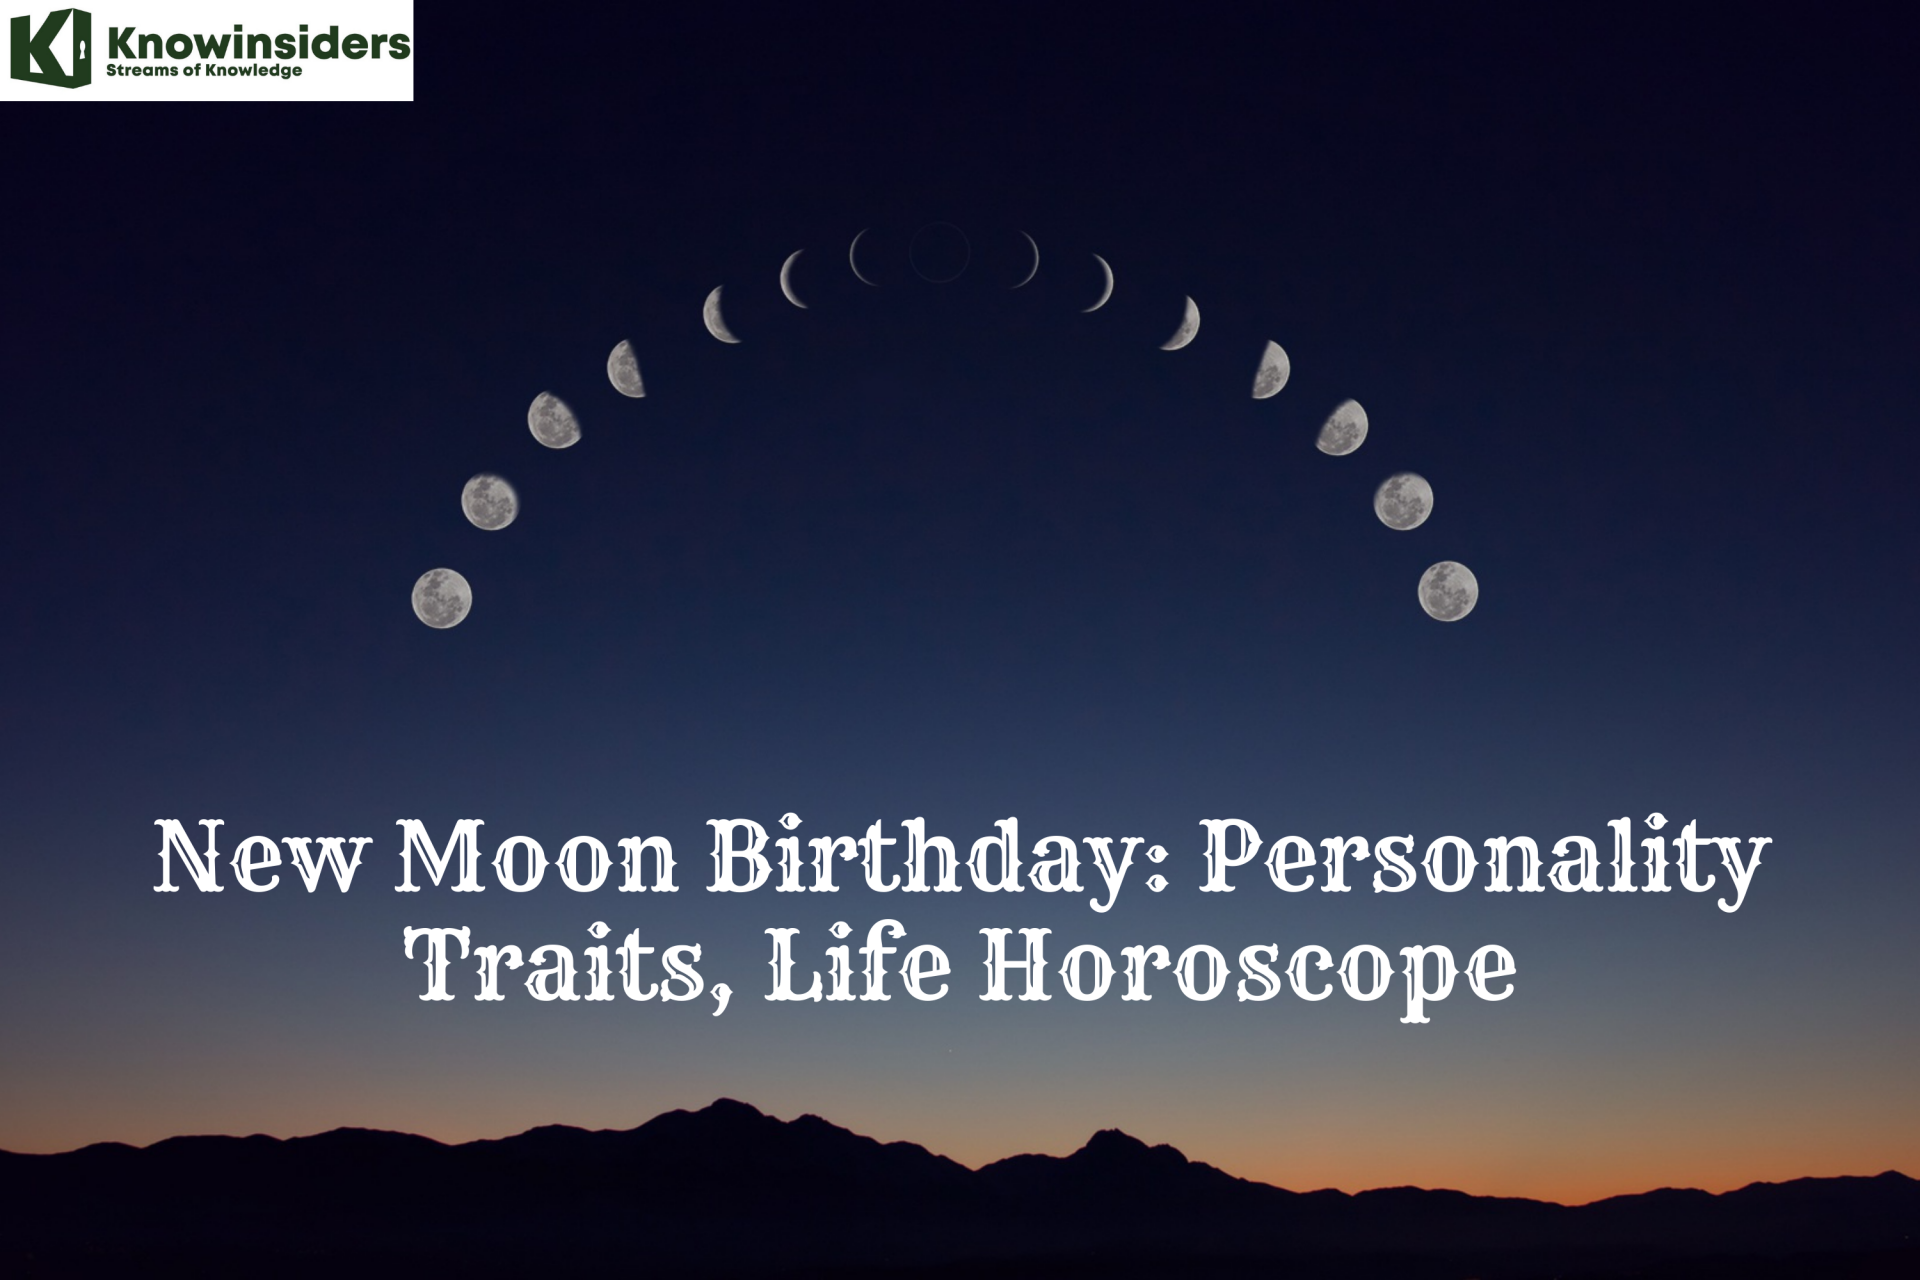 New Moon Birthday: Personality Traits, Life Horoscope - Prediction for Your Destiny